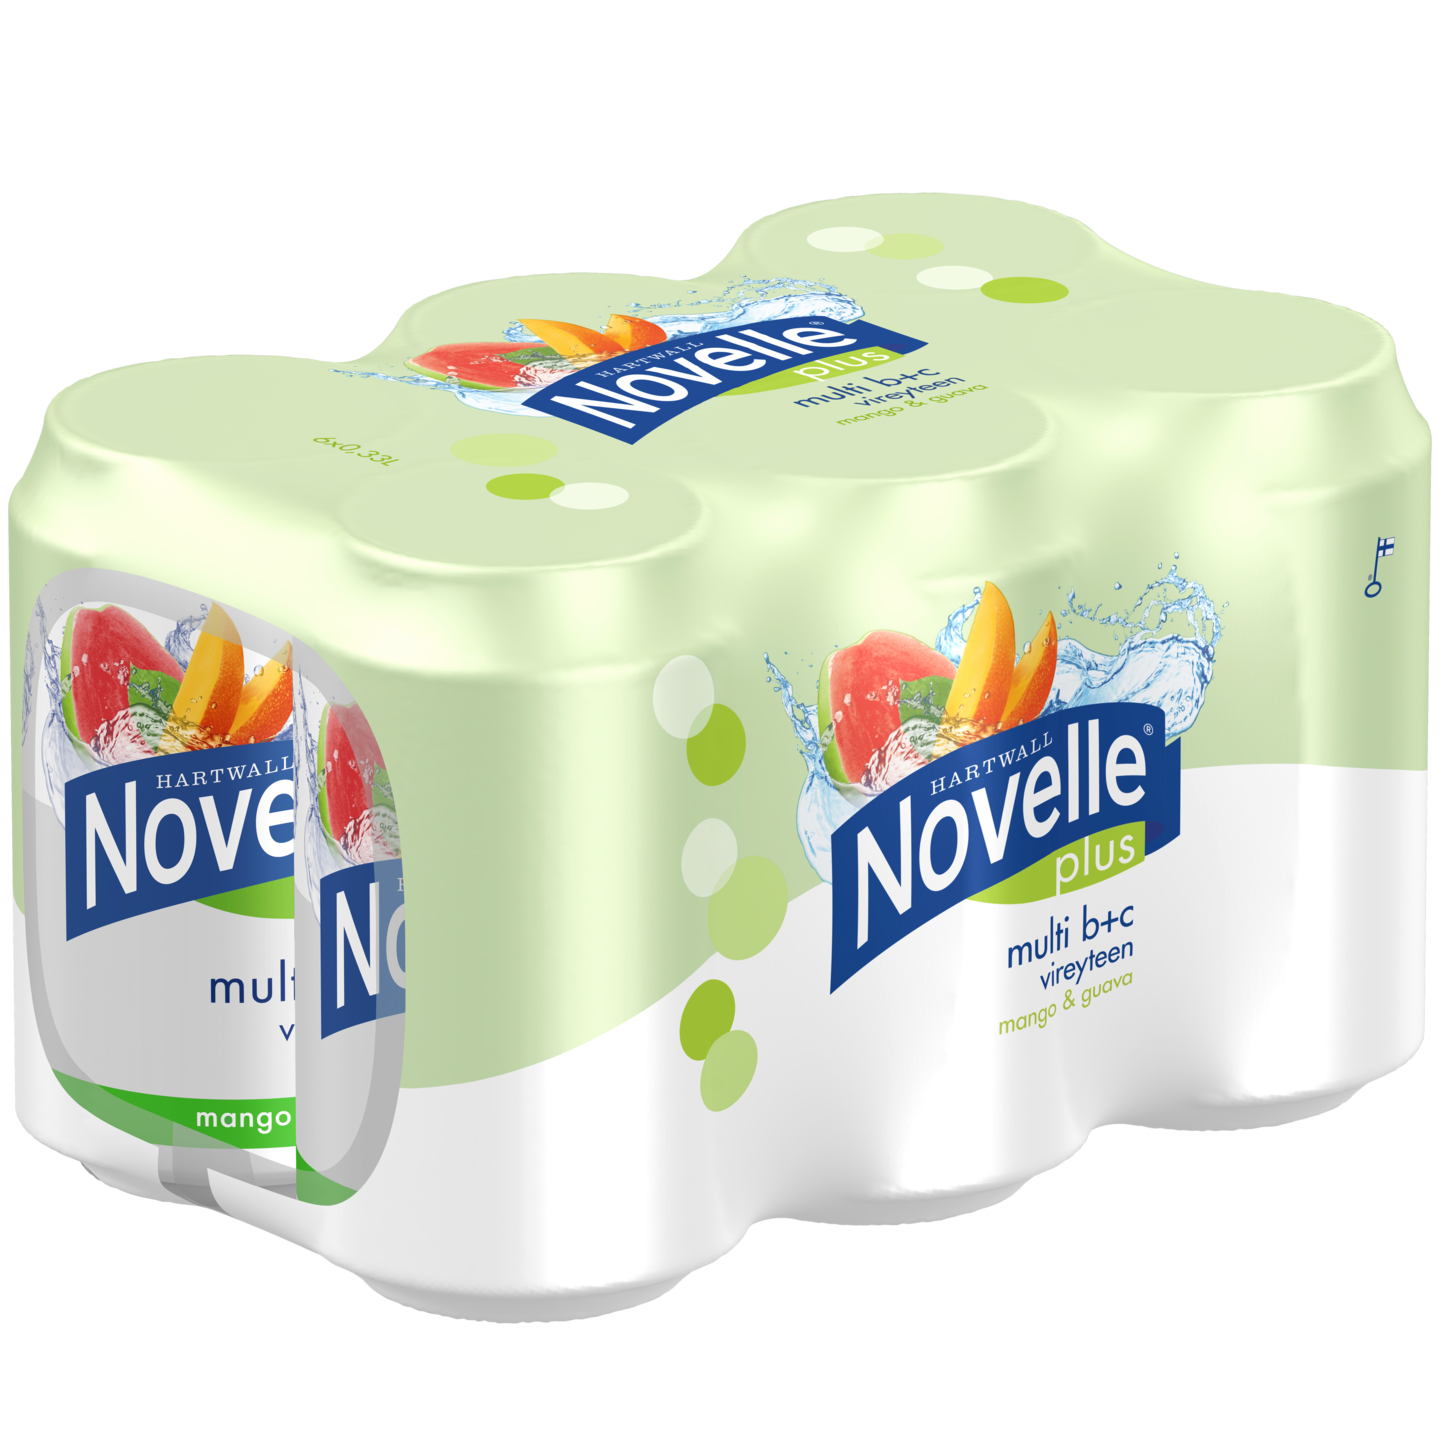 Novelle Plus Multi B+C vitaminisoitu vesi 0,33l 6-pack